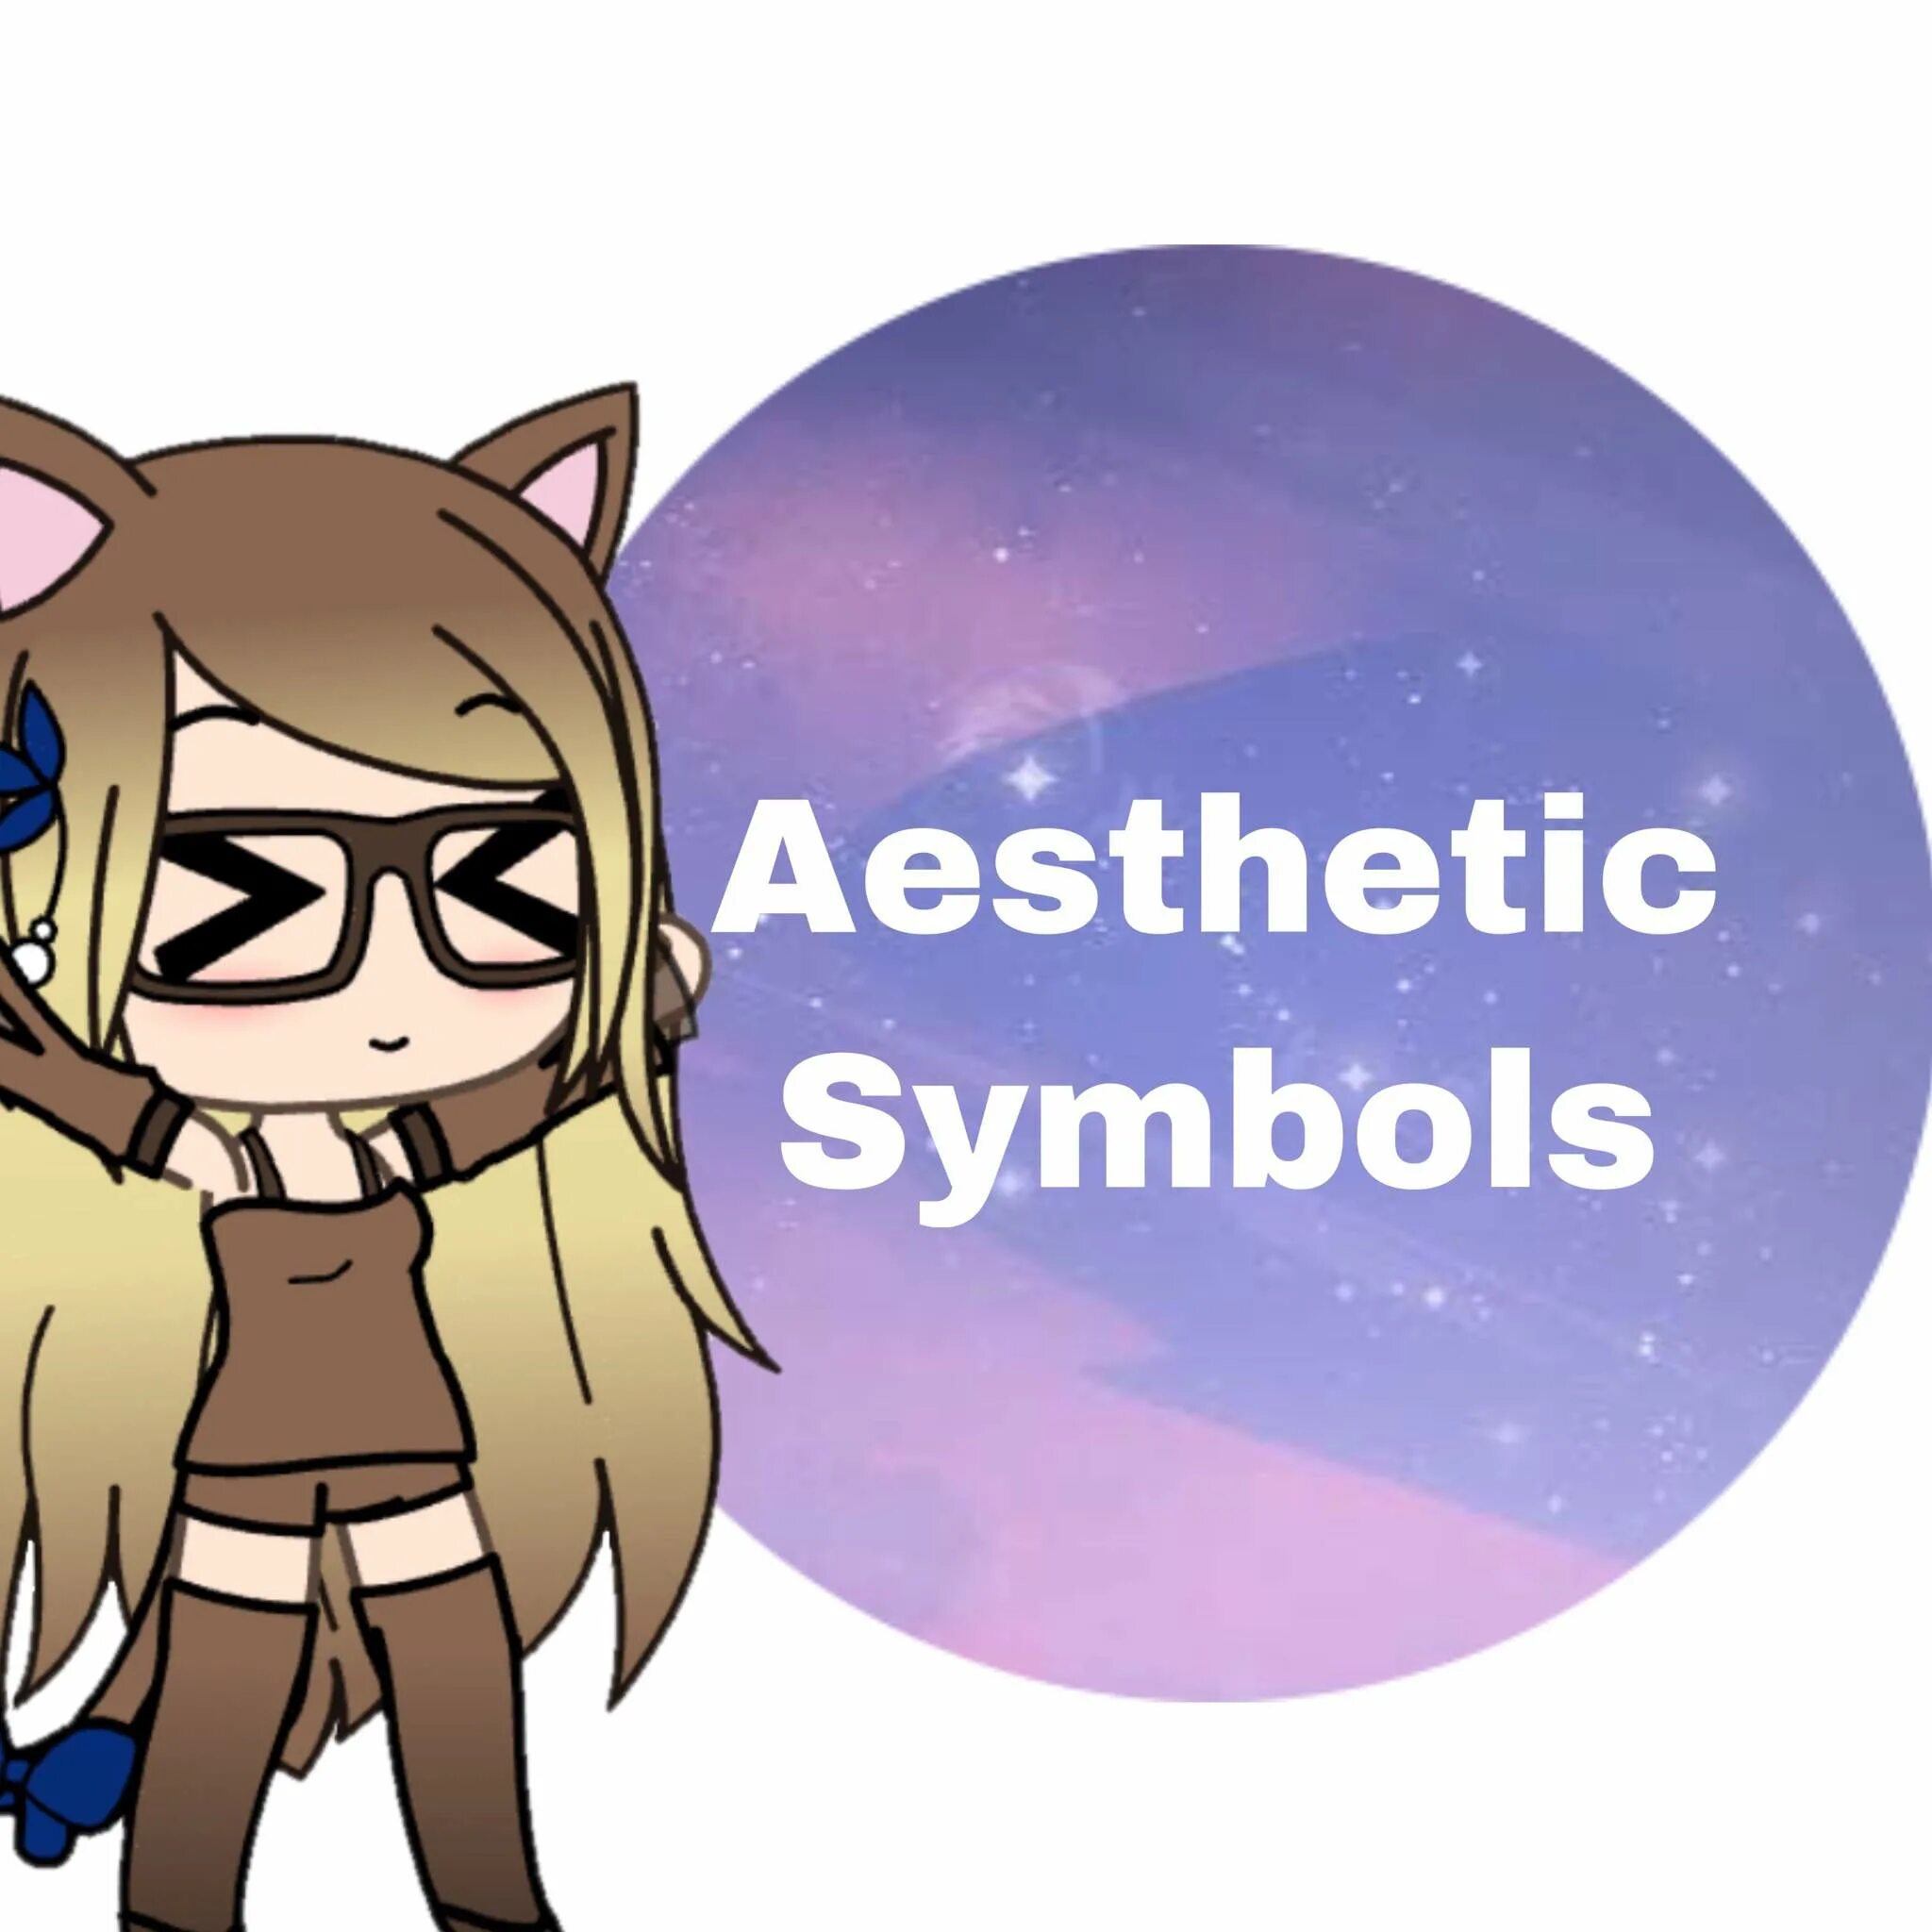 Esthetic symbols. Aesthetic Amino. Aesthetics symbol. Aesthetic symbols. Text aesthetic symbols.